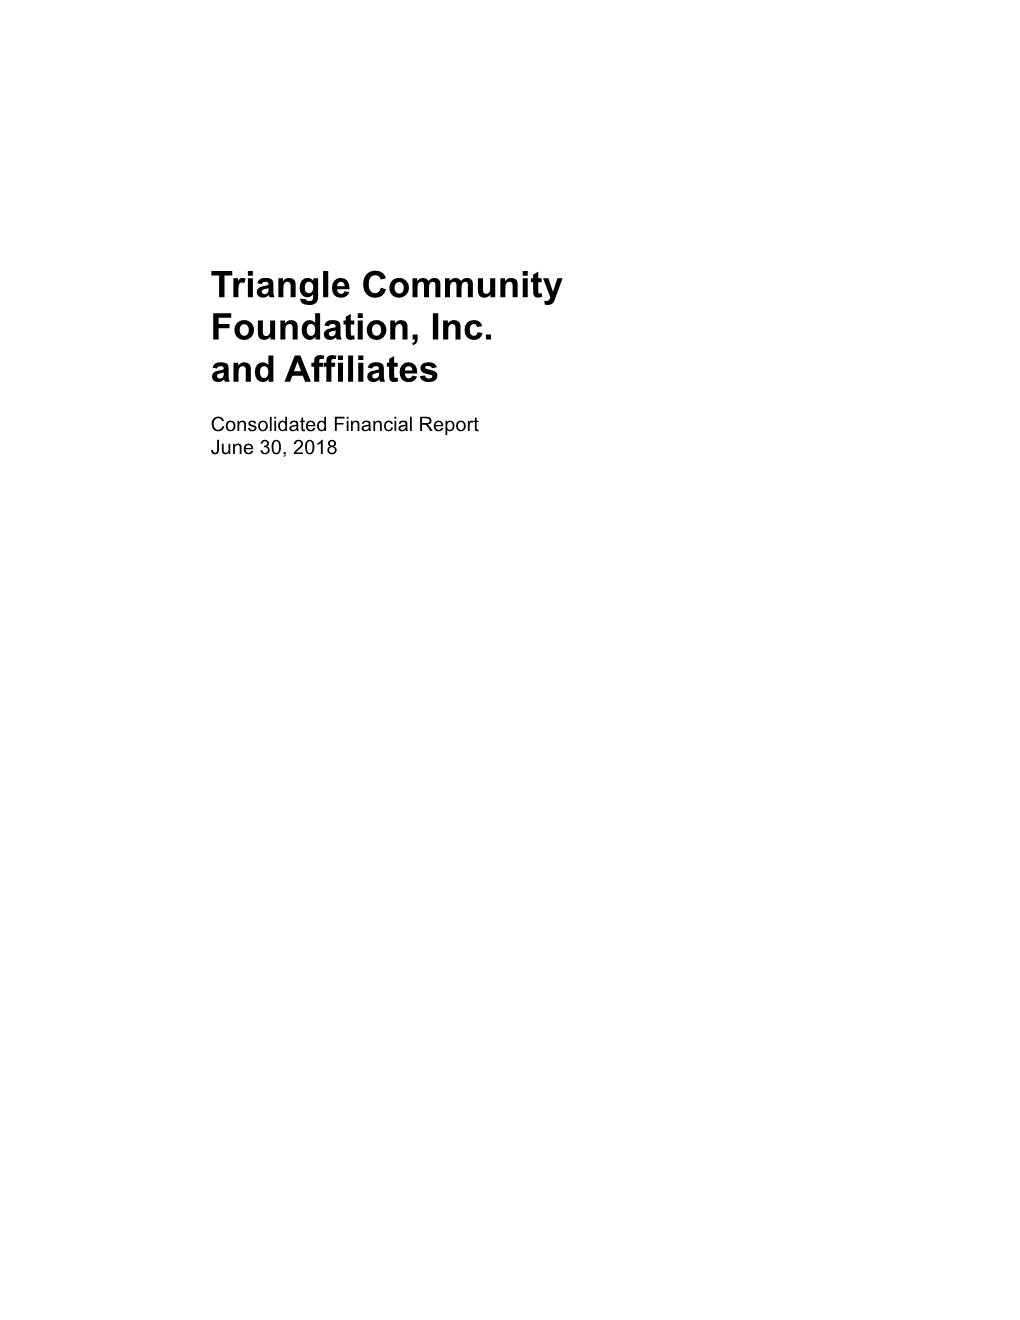 Triangle Community Foundation, Inc. and Affiliates